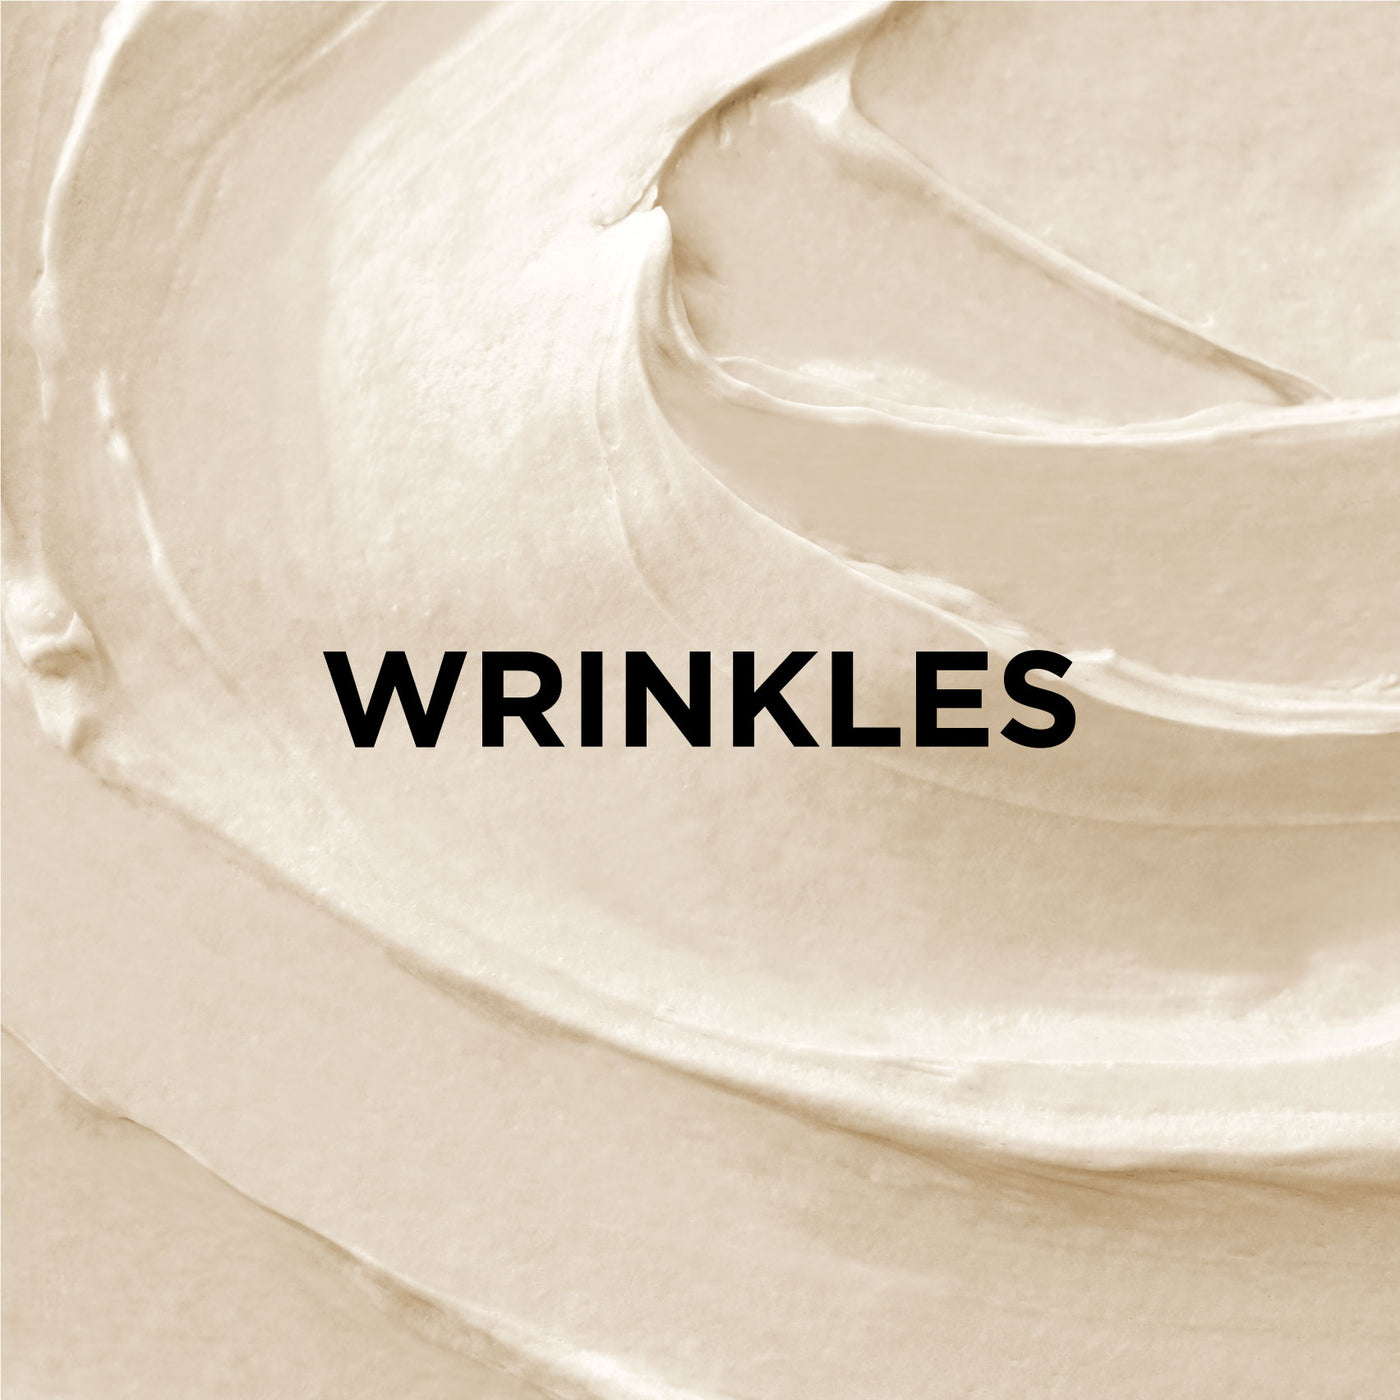 Fine Lines and Wrinkles | تجاعيد